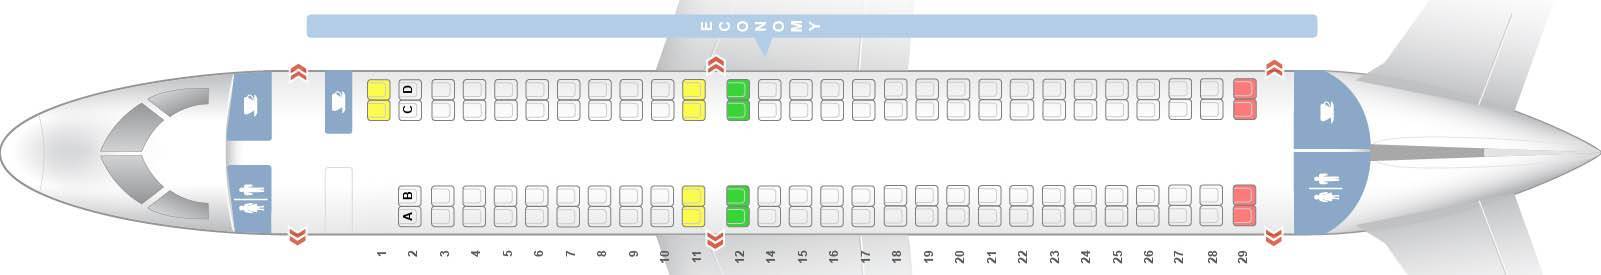 Embraer 190 — обзор самолета, схема салона и лучшие места